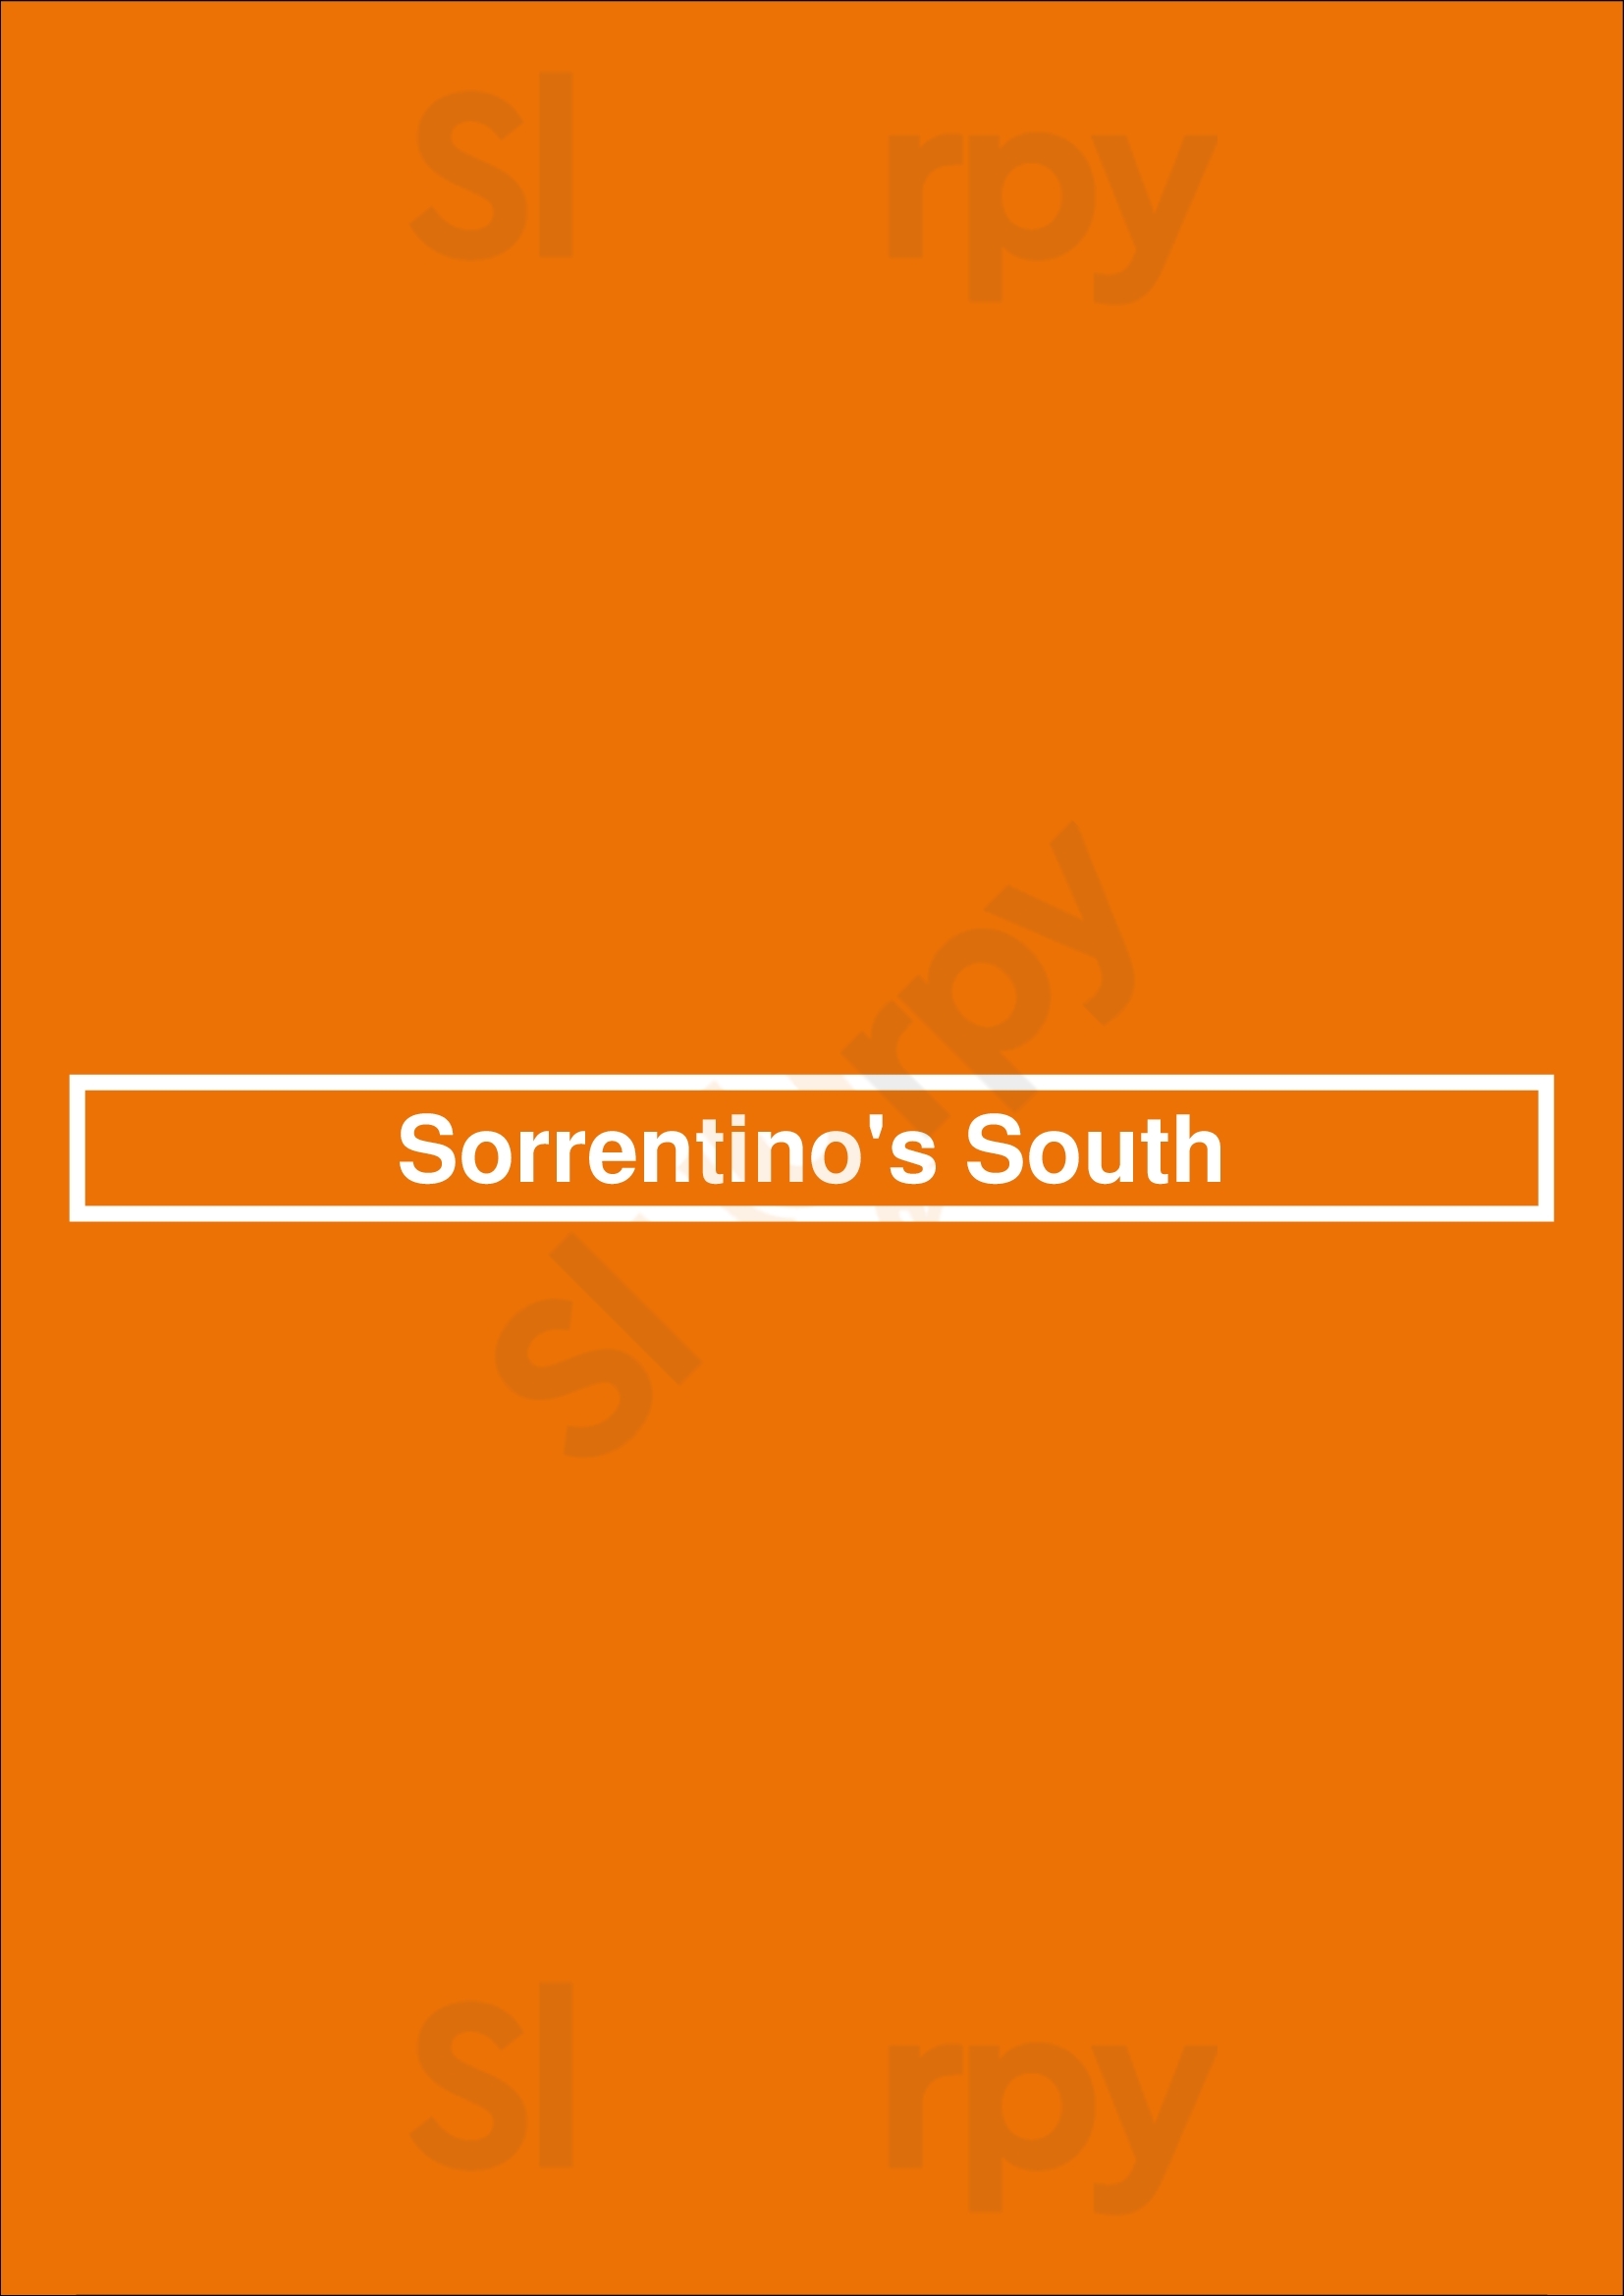 Sorrentino's South Edmonton Menu - 1